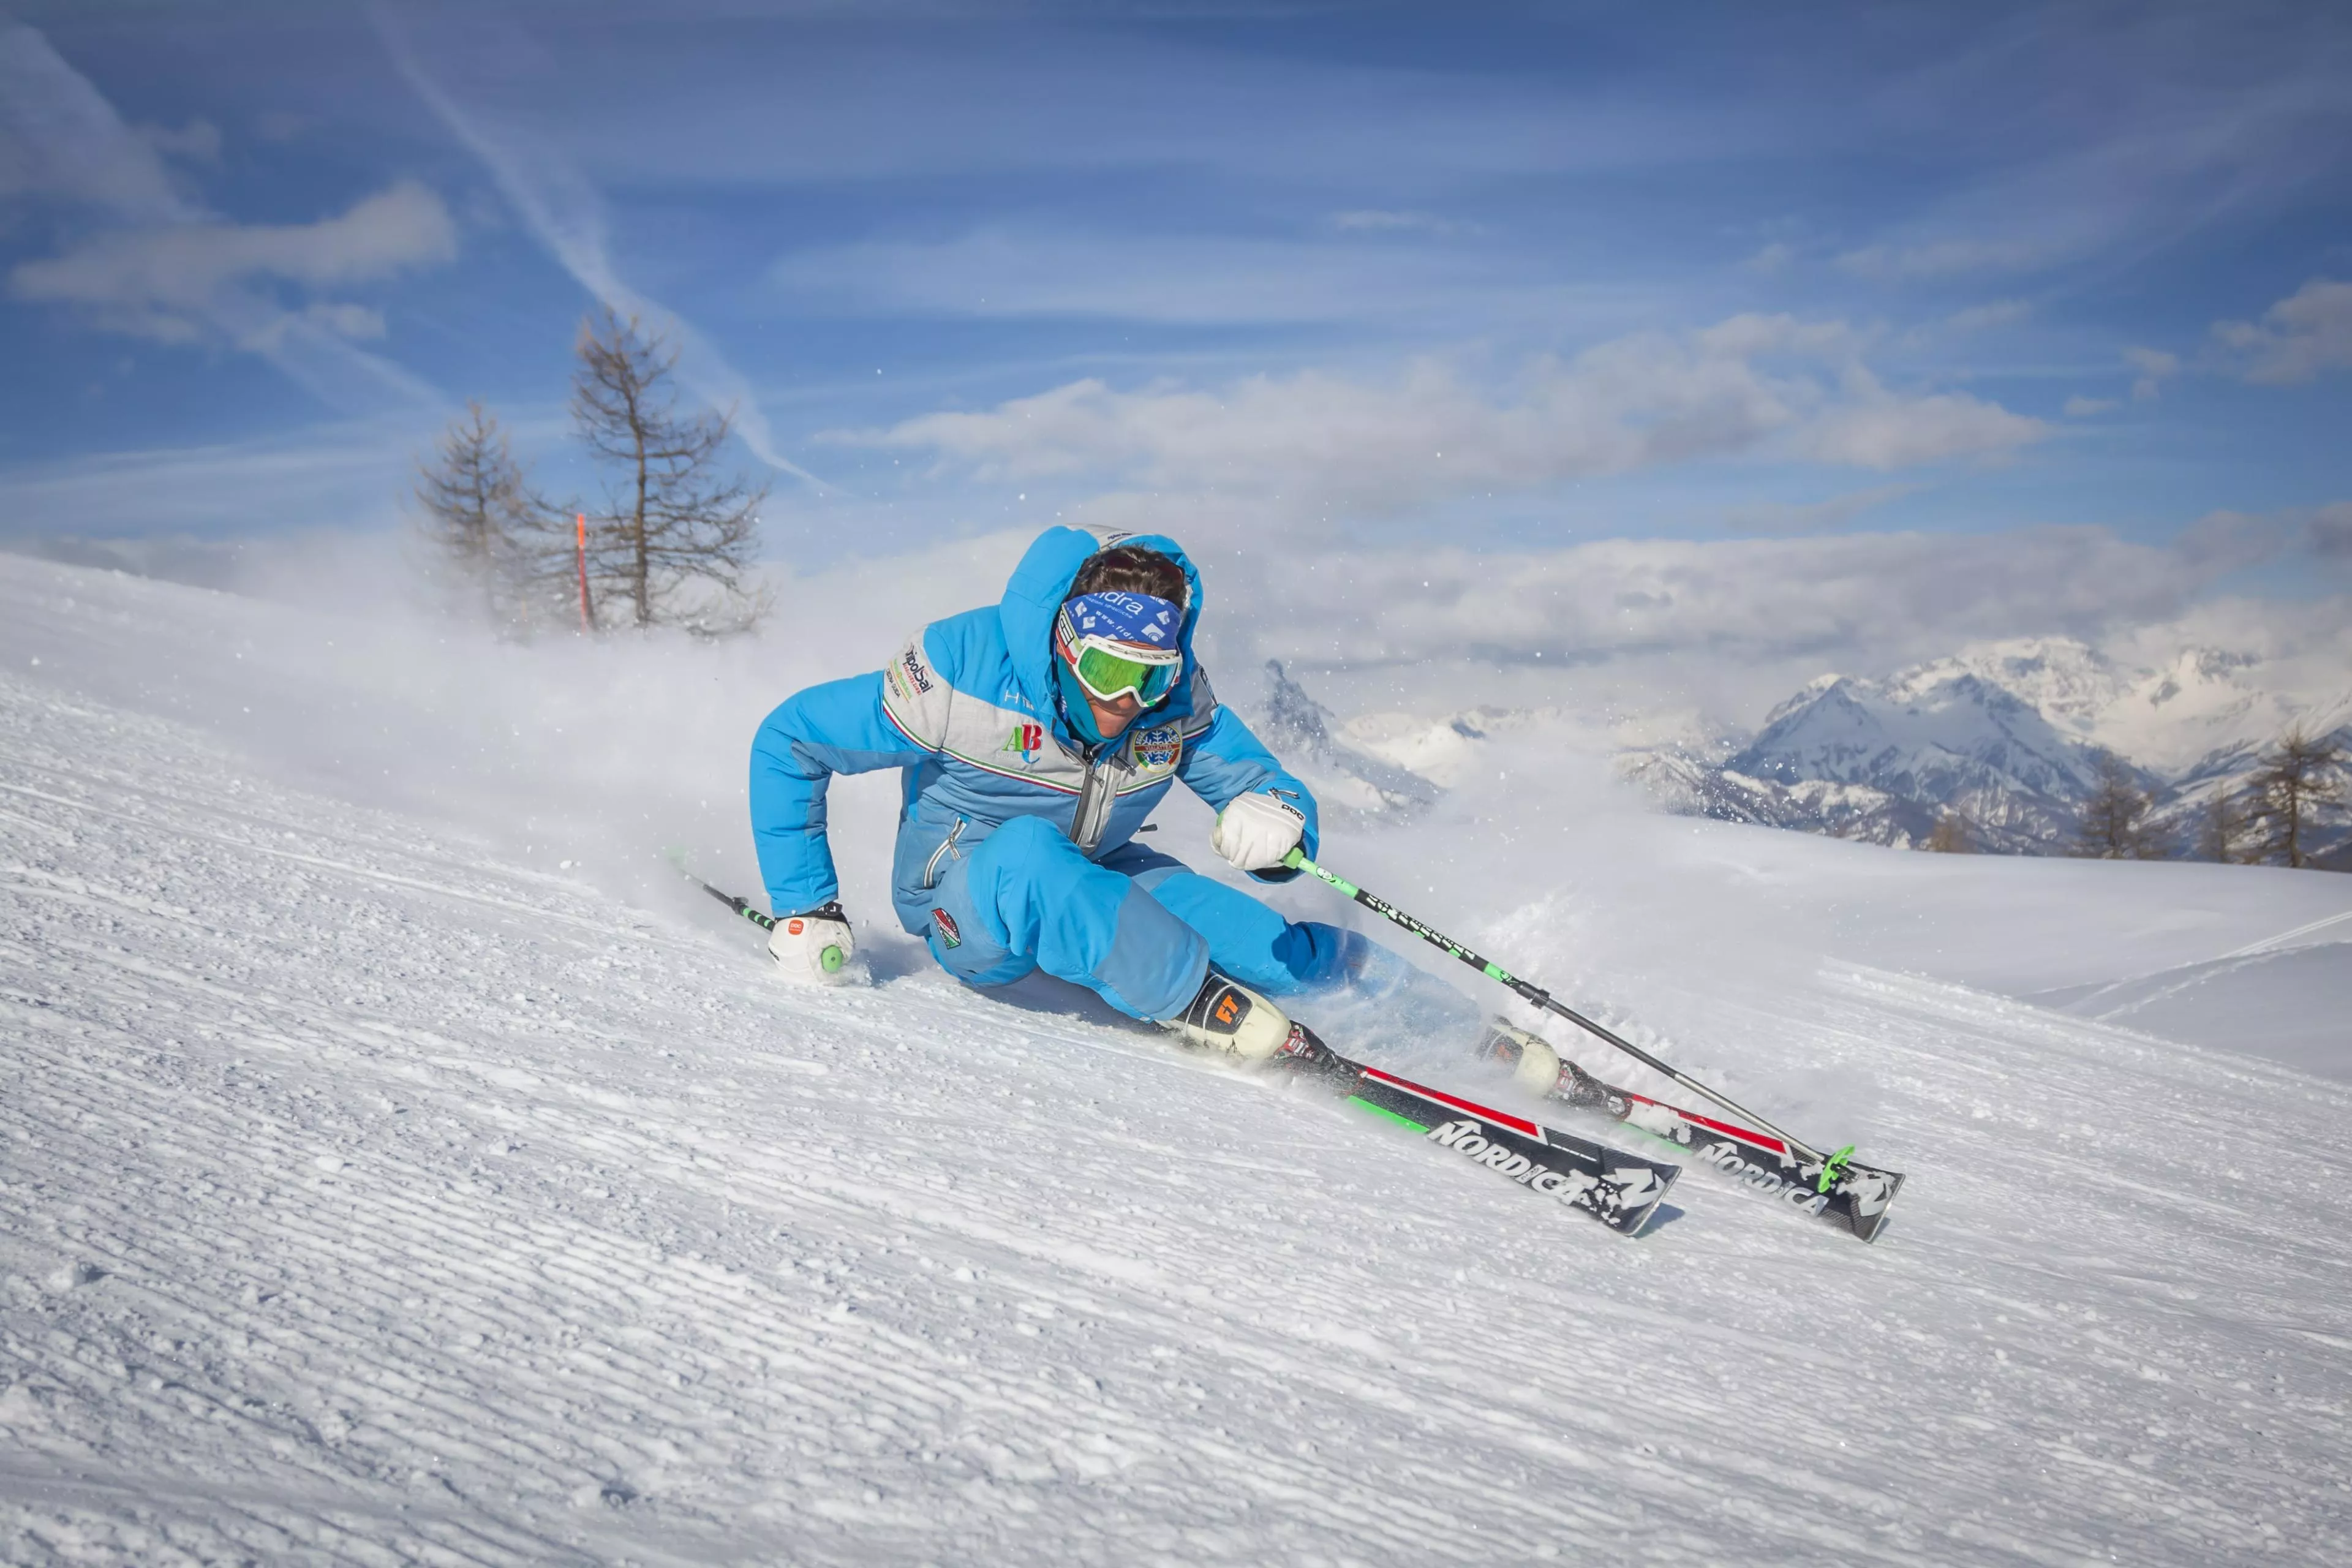 Vialattea in Italy, Europe | Snowboarding,Skiing - Rated 0.8